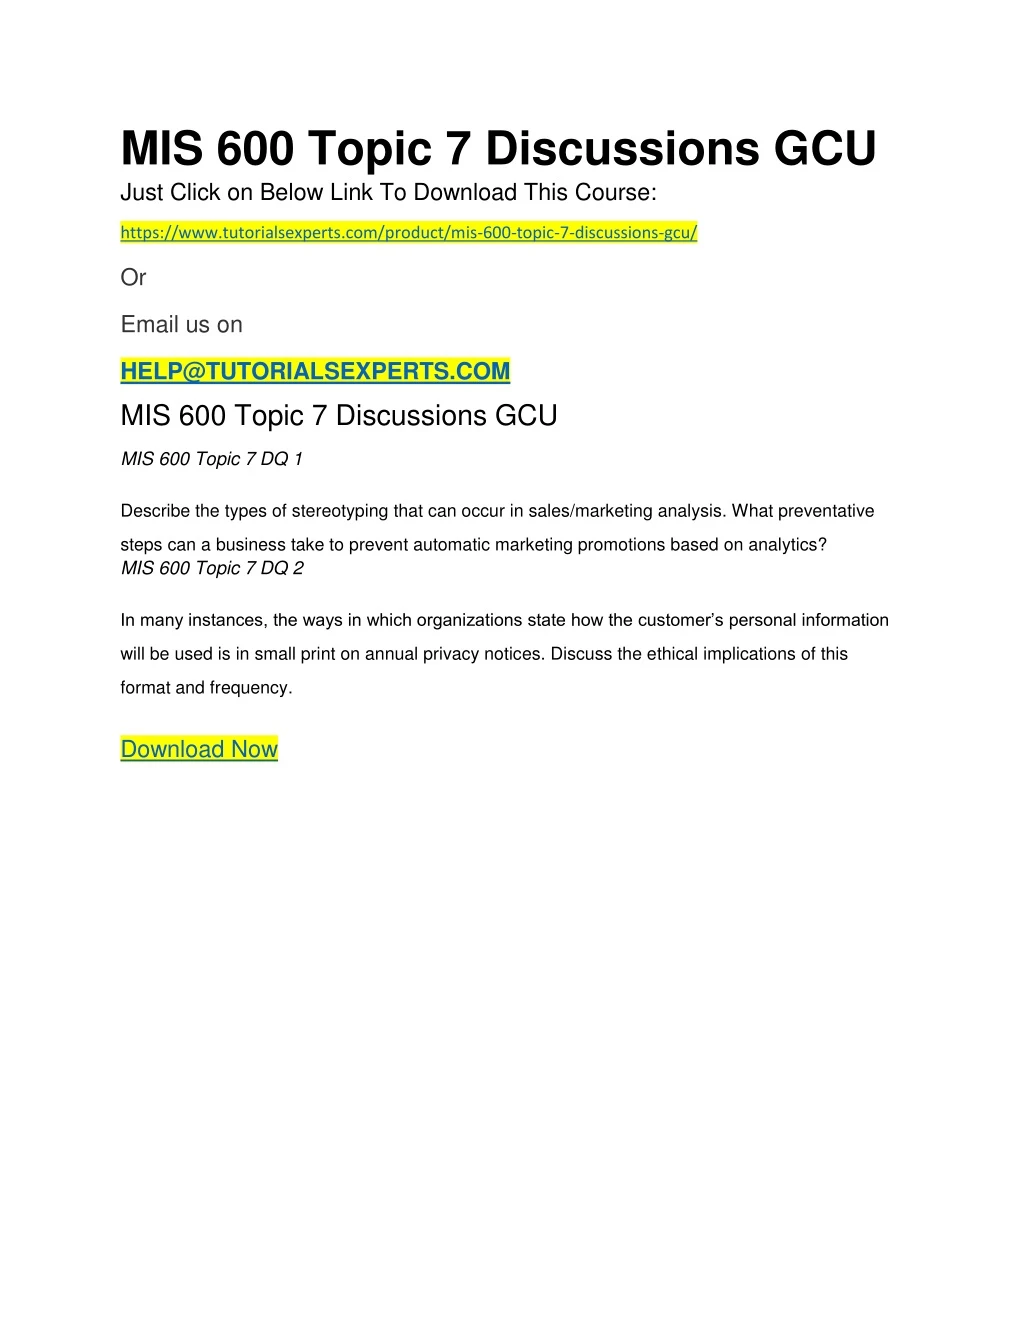 mis 600 topic 7 discussions gcu just click